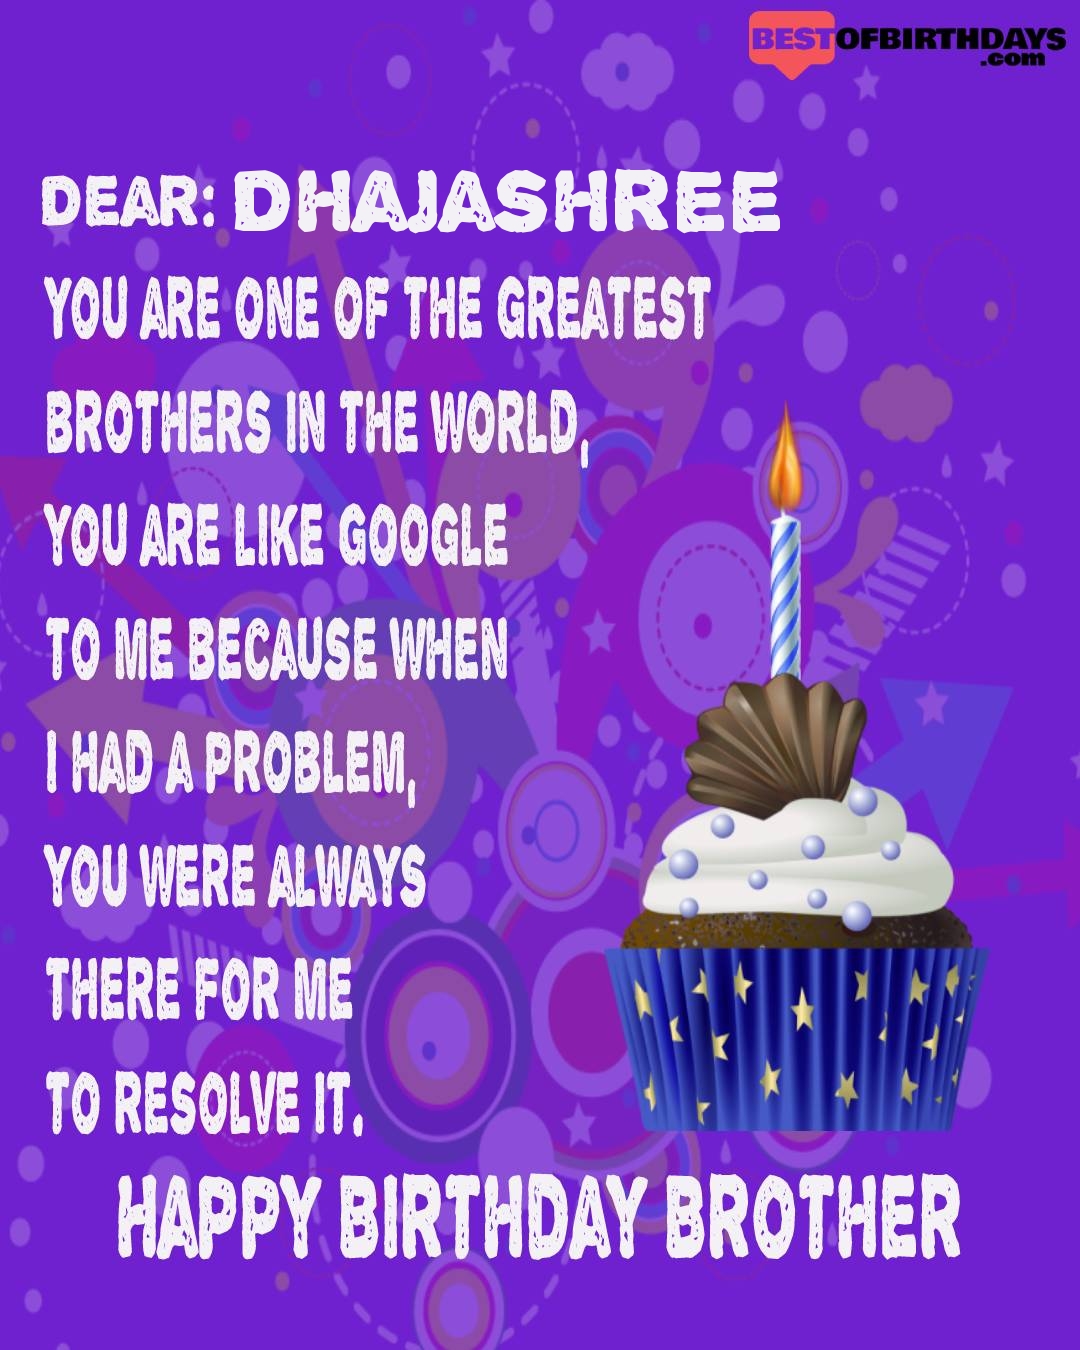 Happy birthday dhajashree bhai brother bro